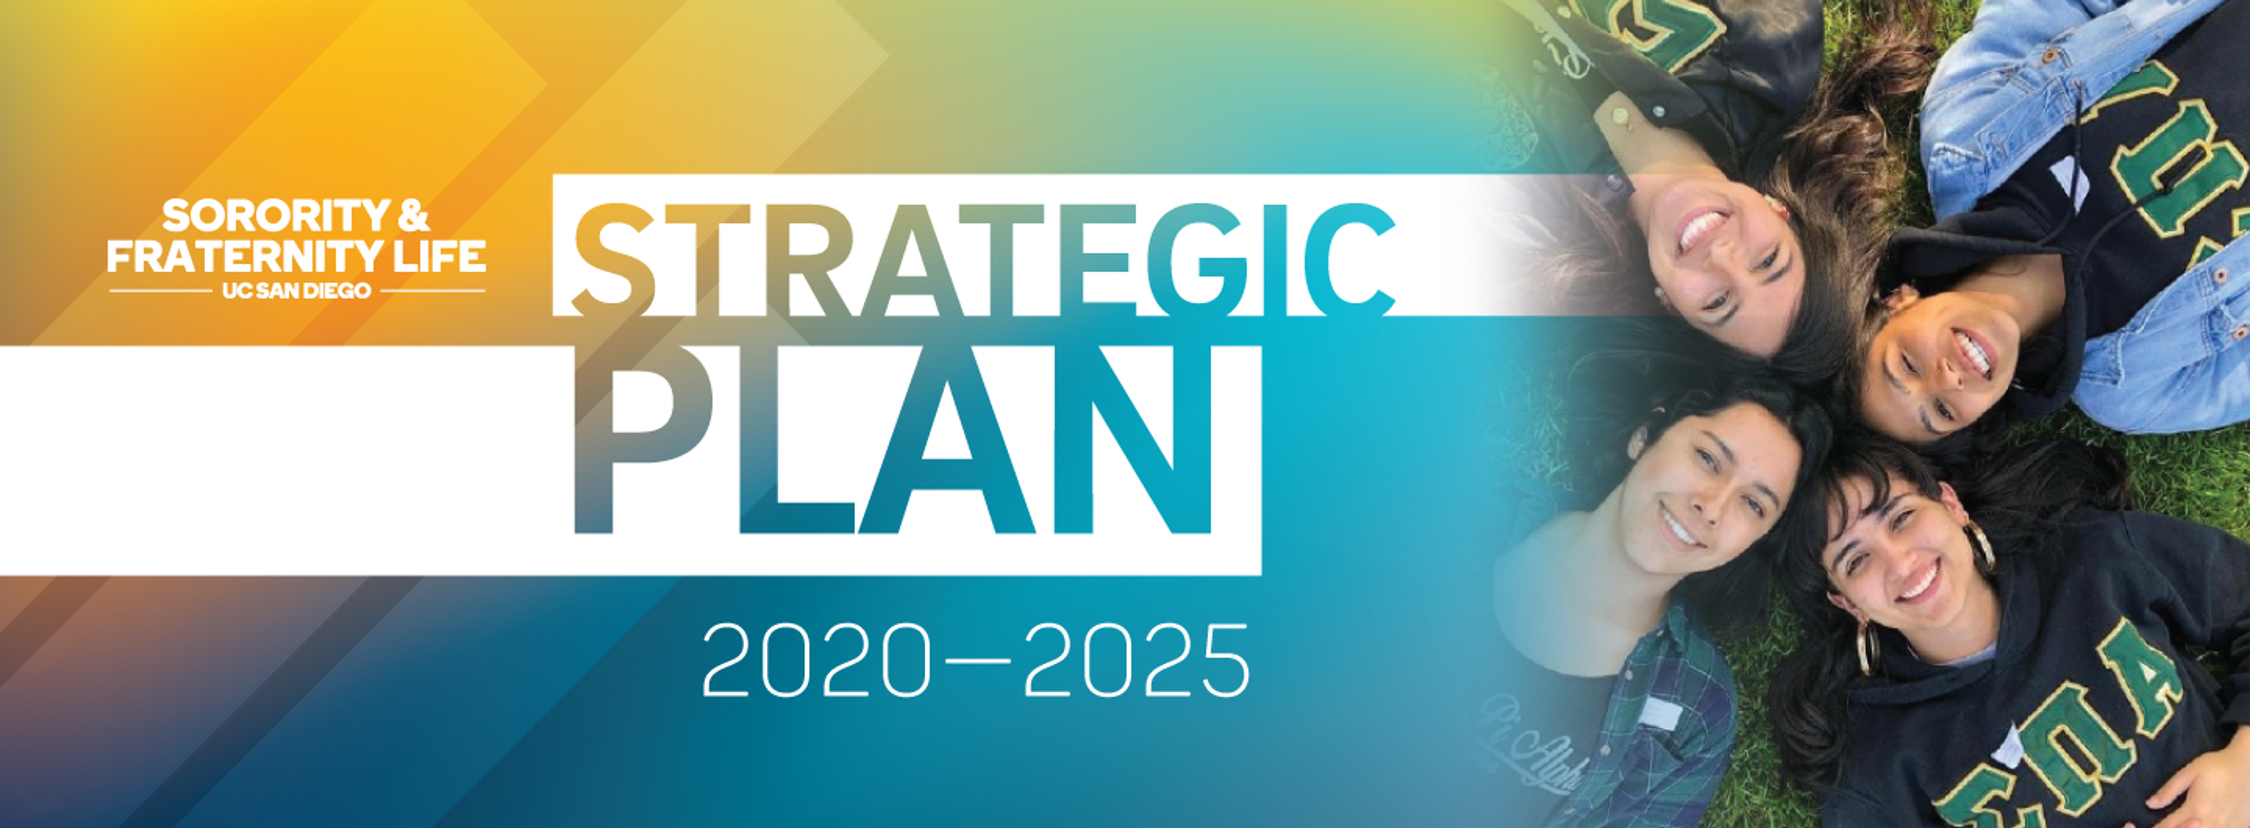 Strategic-Plan-Banner-2.png